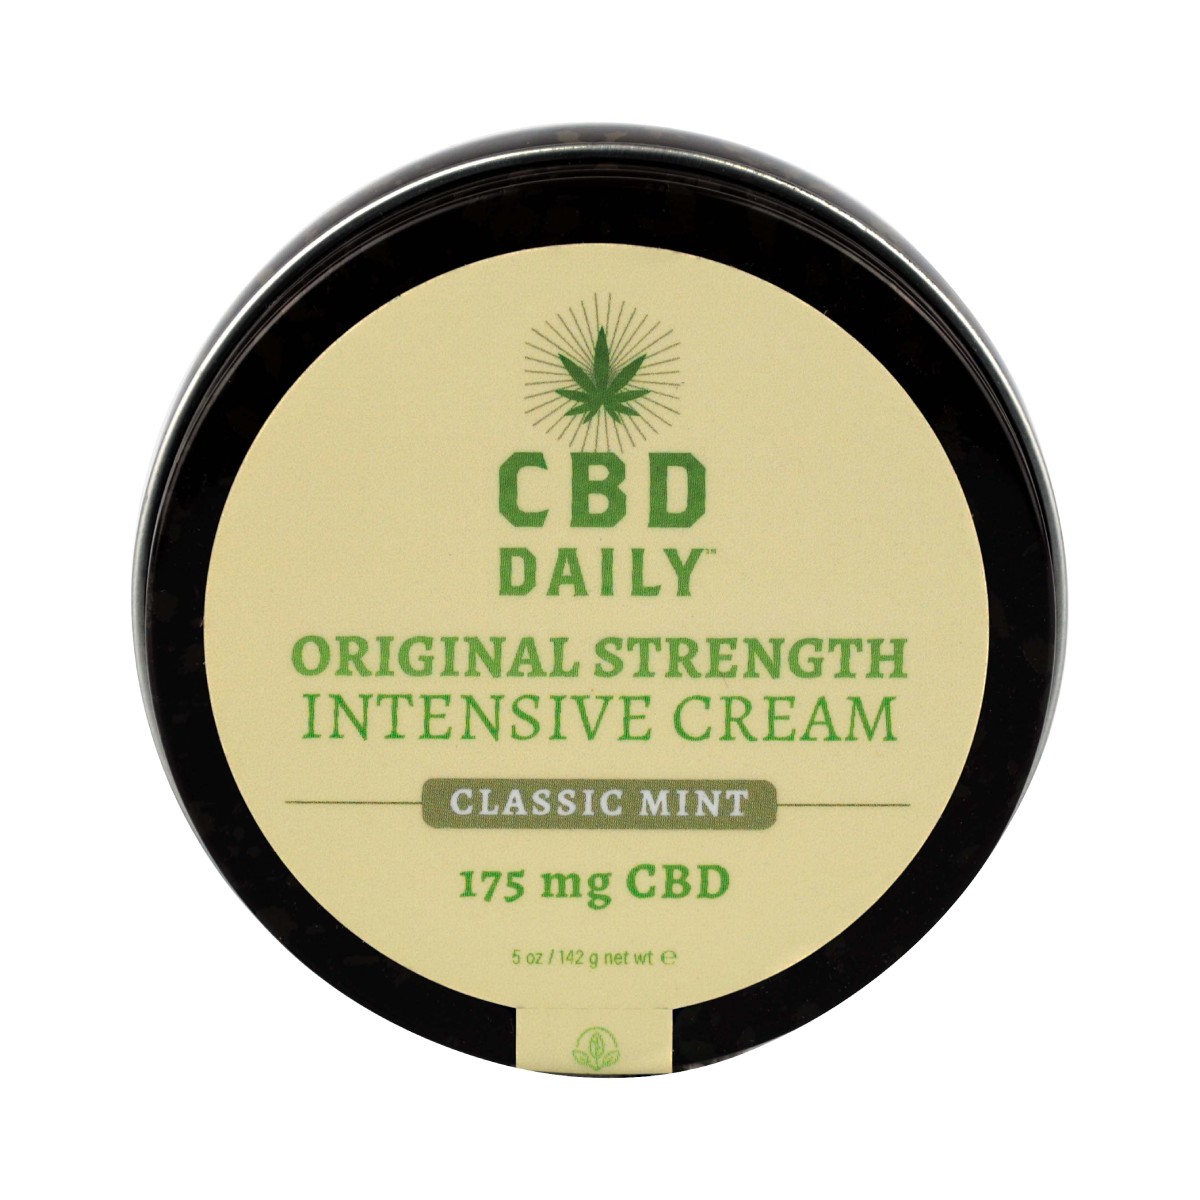 Original Strength Intensive Cream Grapefruit Mint Scent 5 oz | Shop Earthly Body